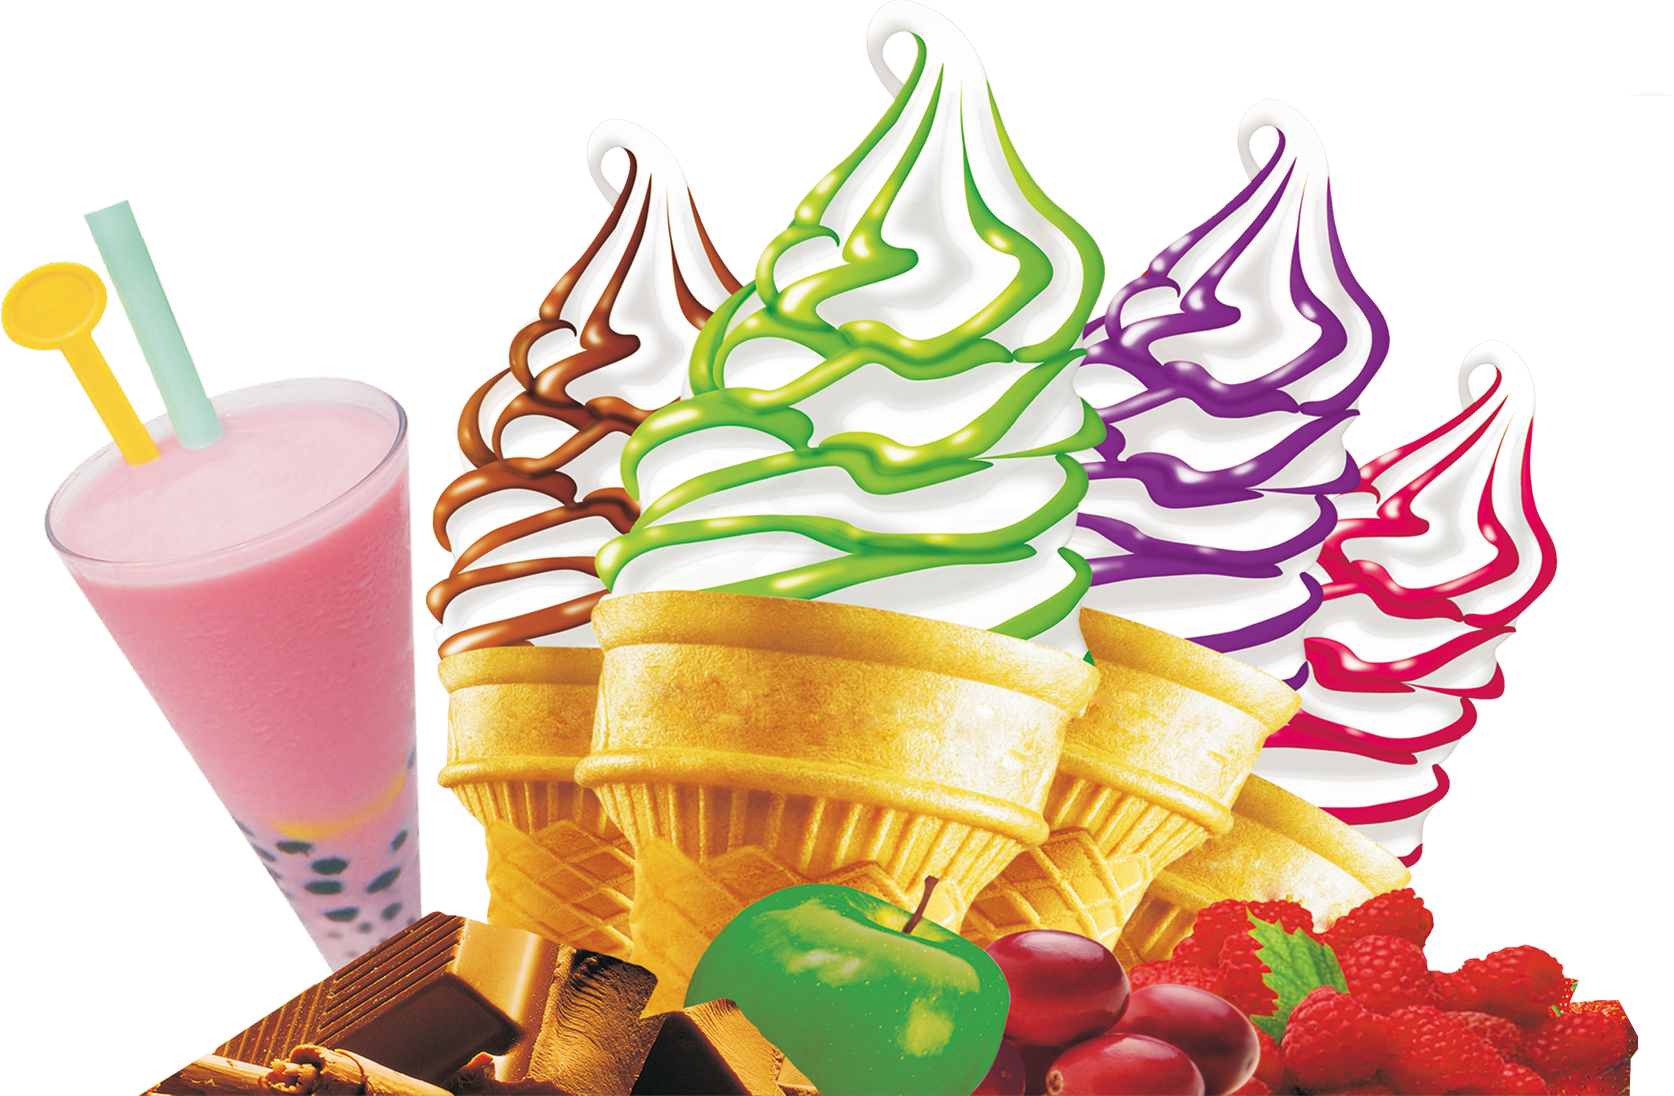 Ice Cream Cone Frozen Yogurt Ice Pop - Carpigiani Ice Cream Cone (1674x1096)